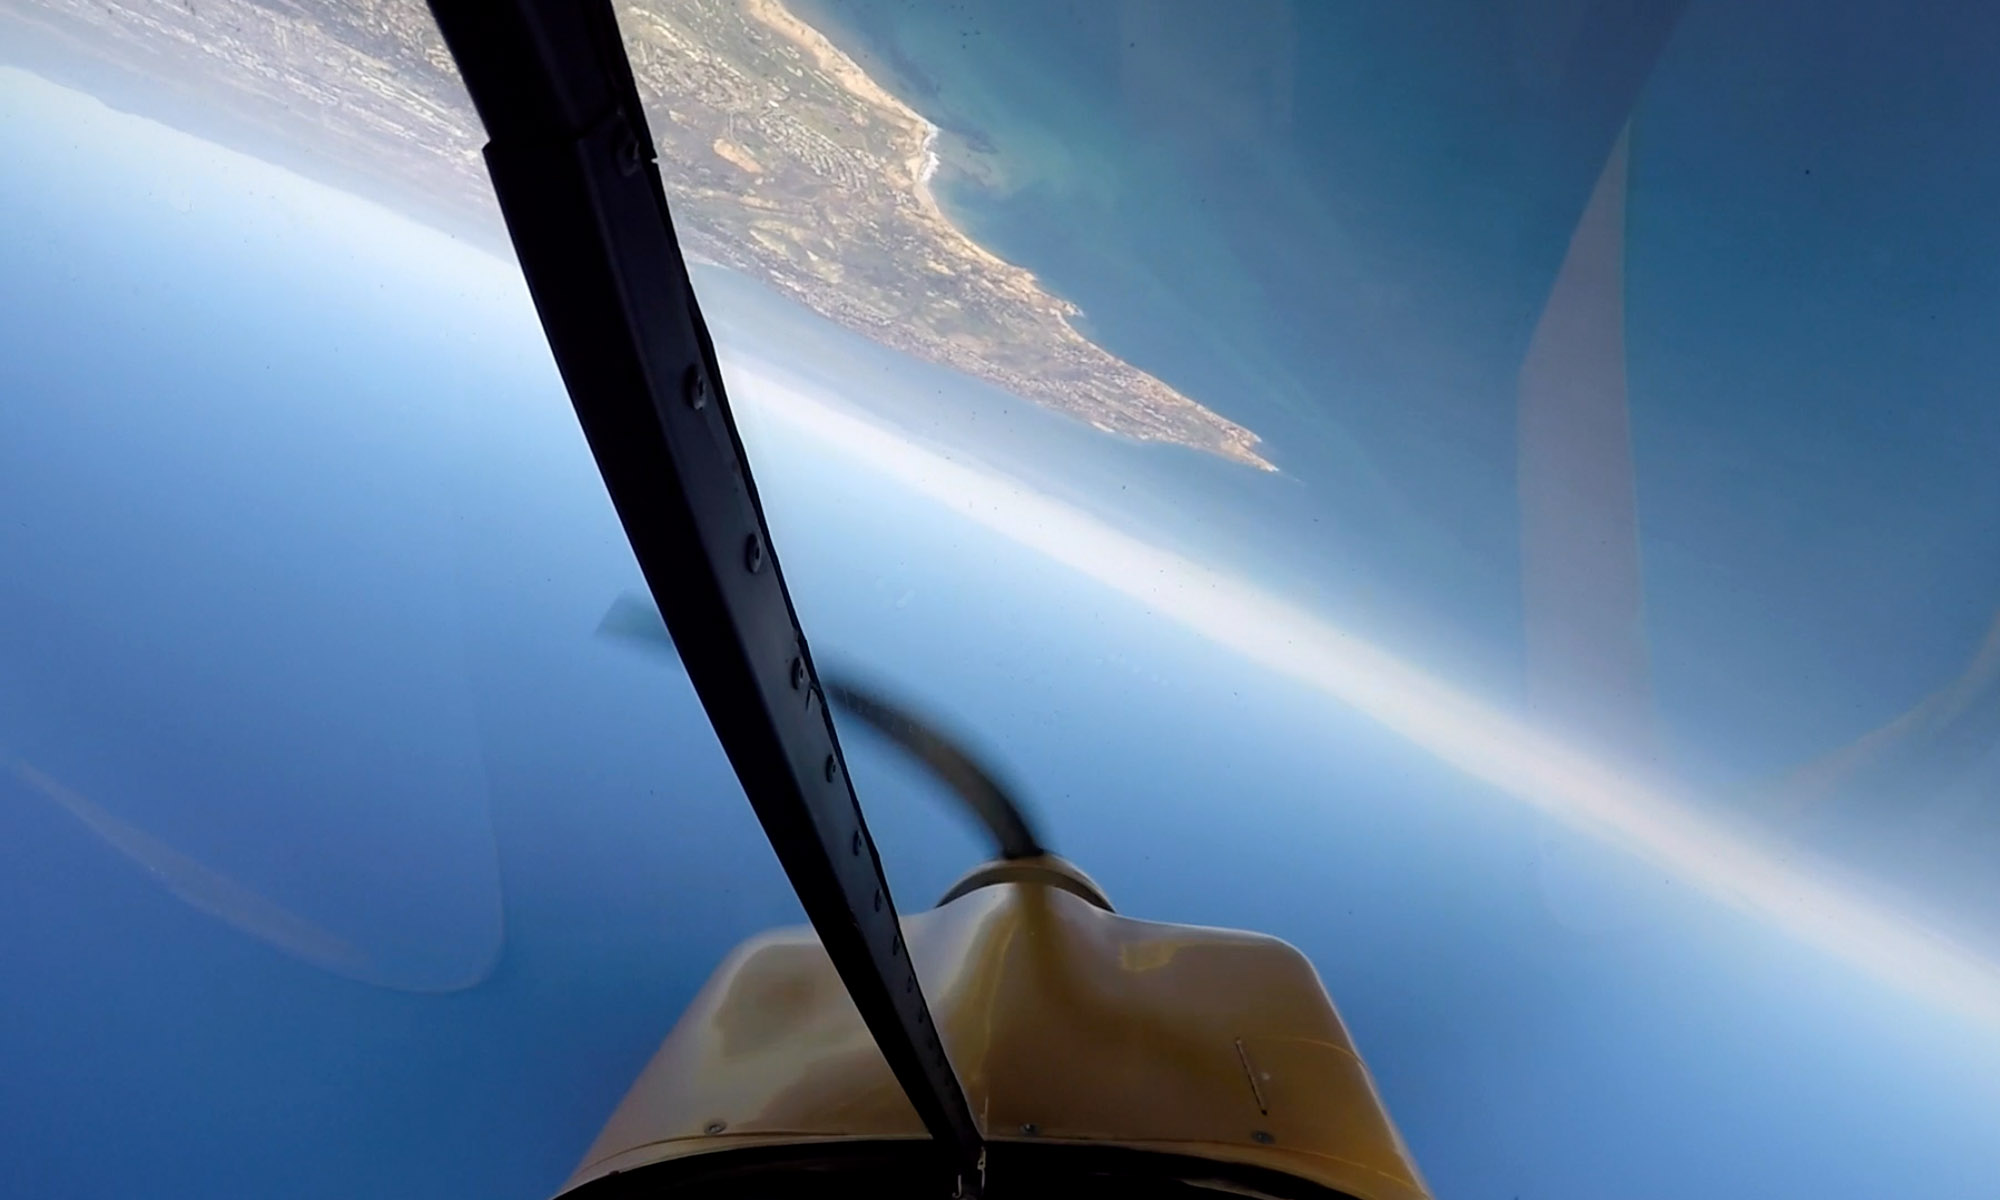 Aerobatic airplane flying inverted